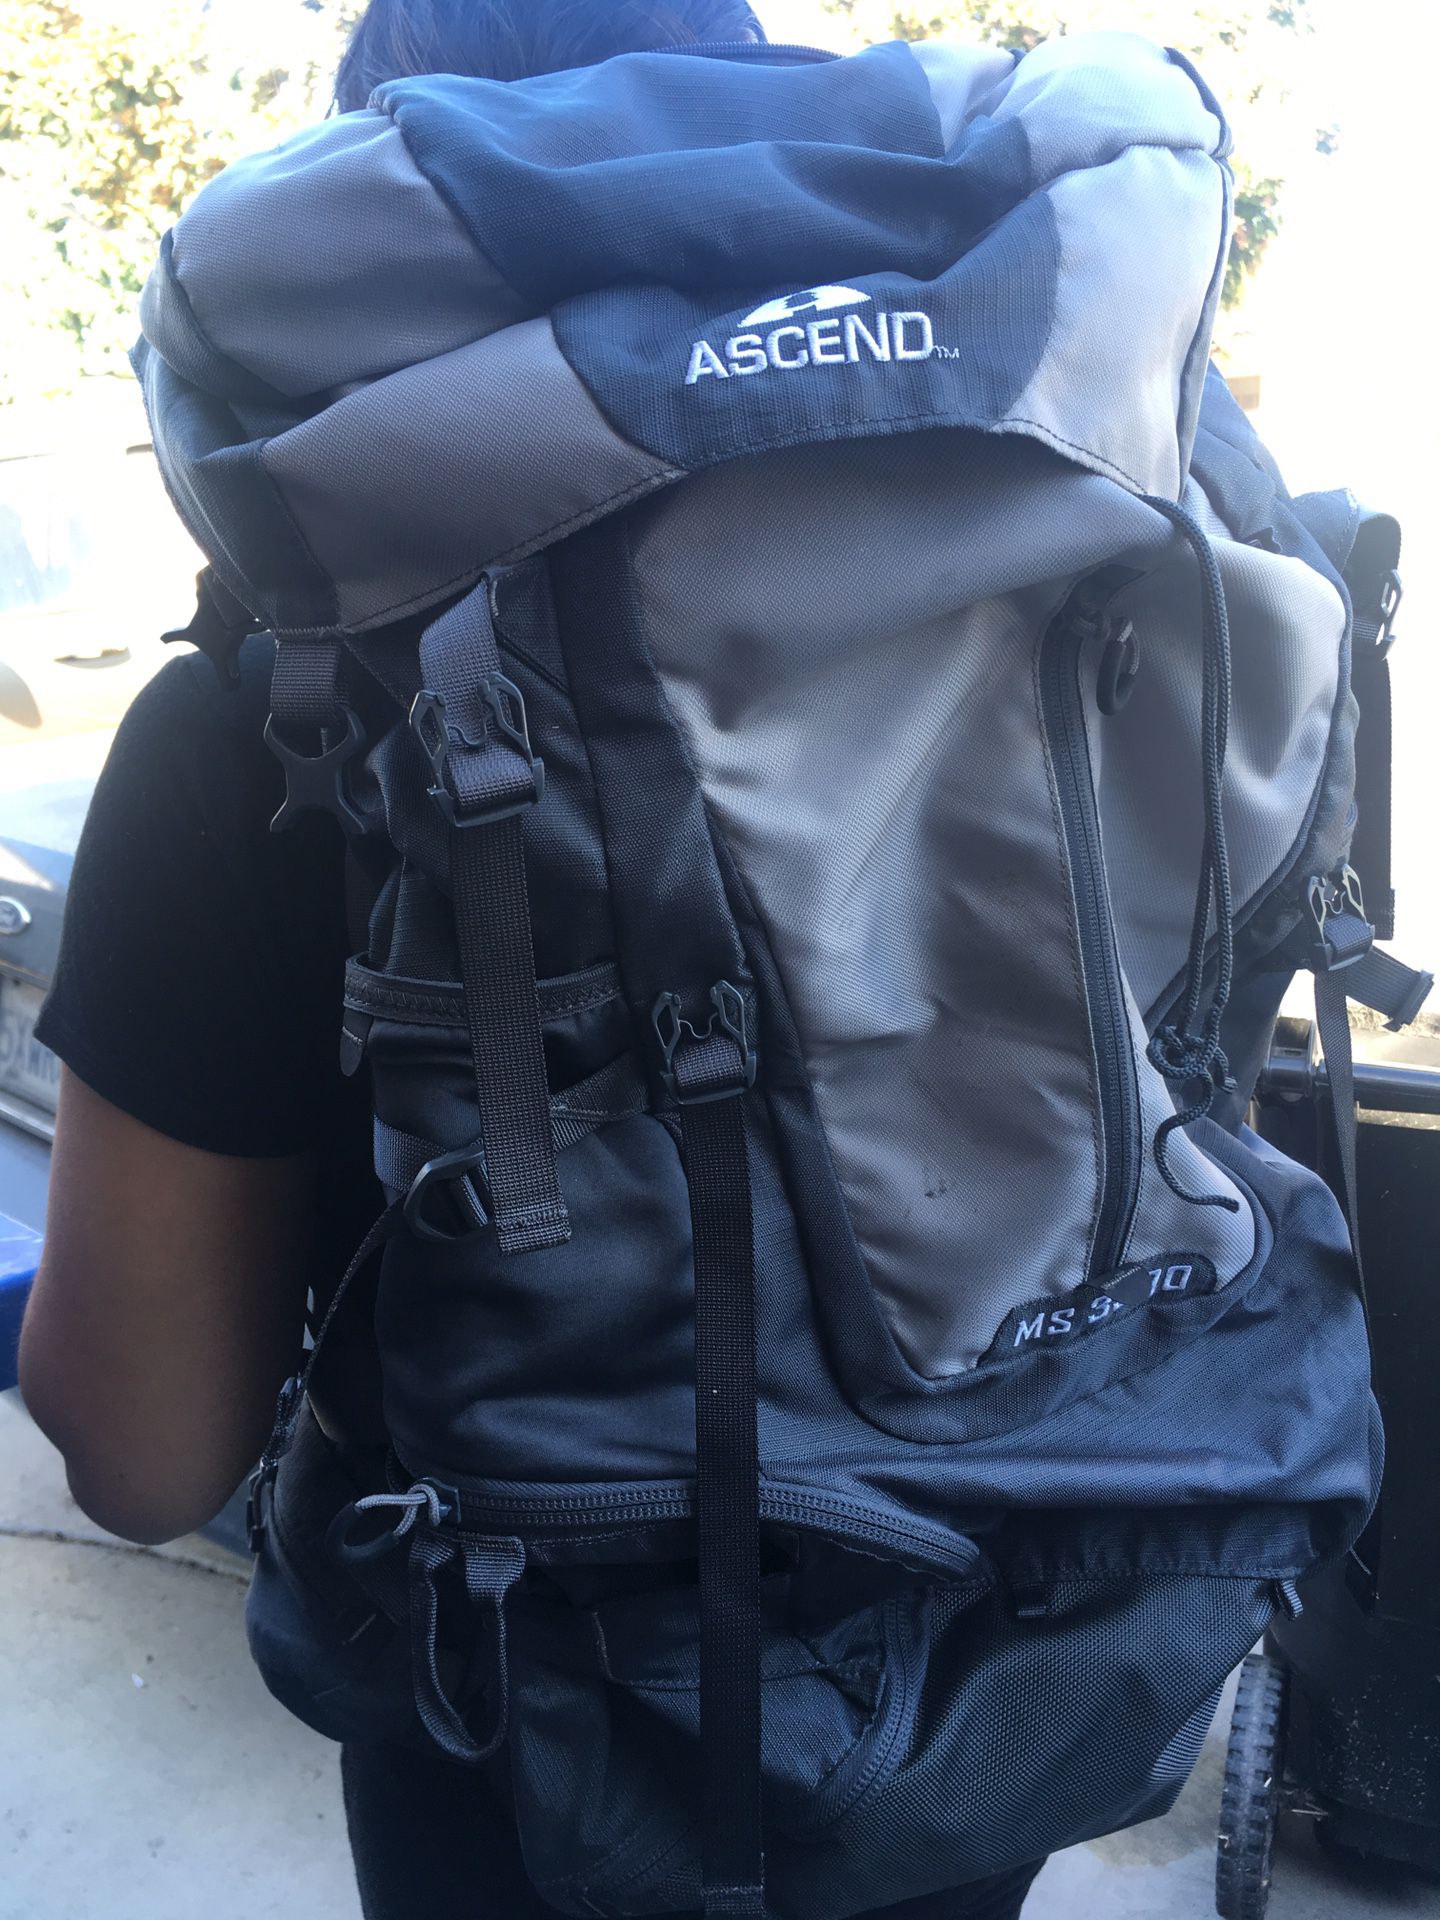 Ascend MS3300 Hiking Backpack